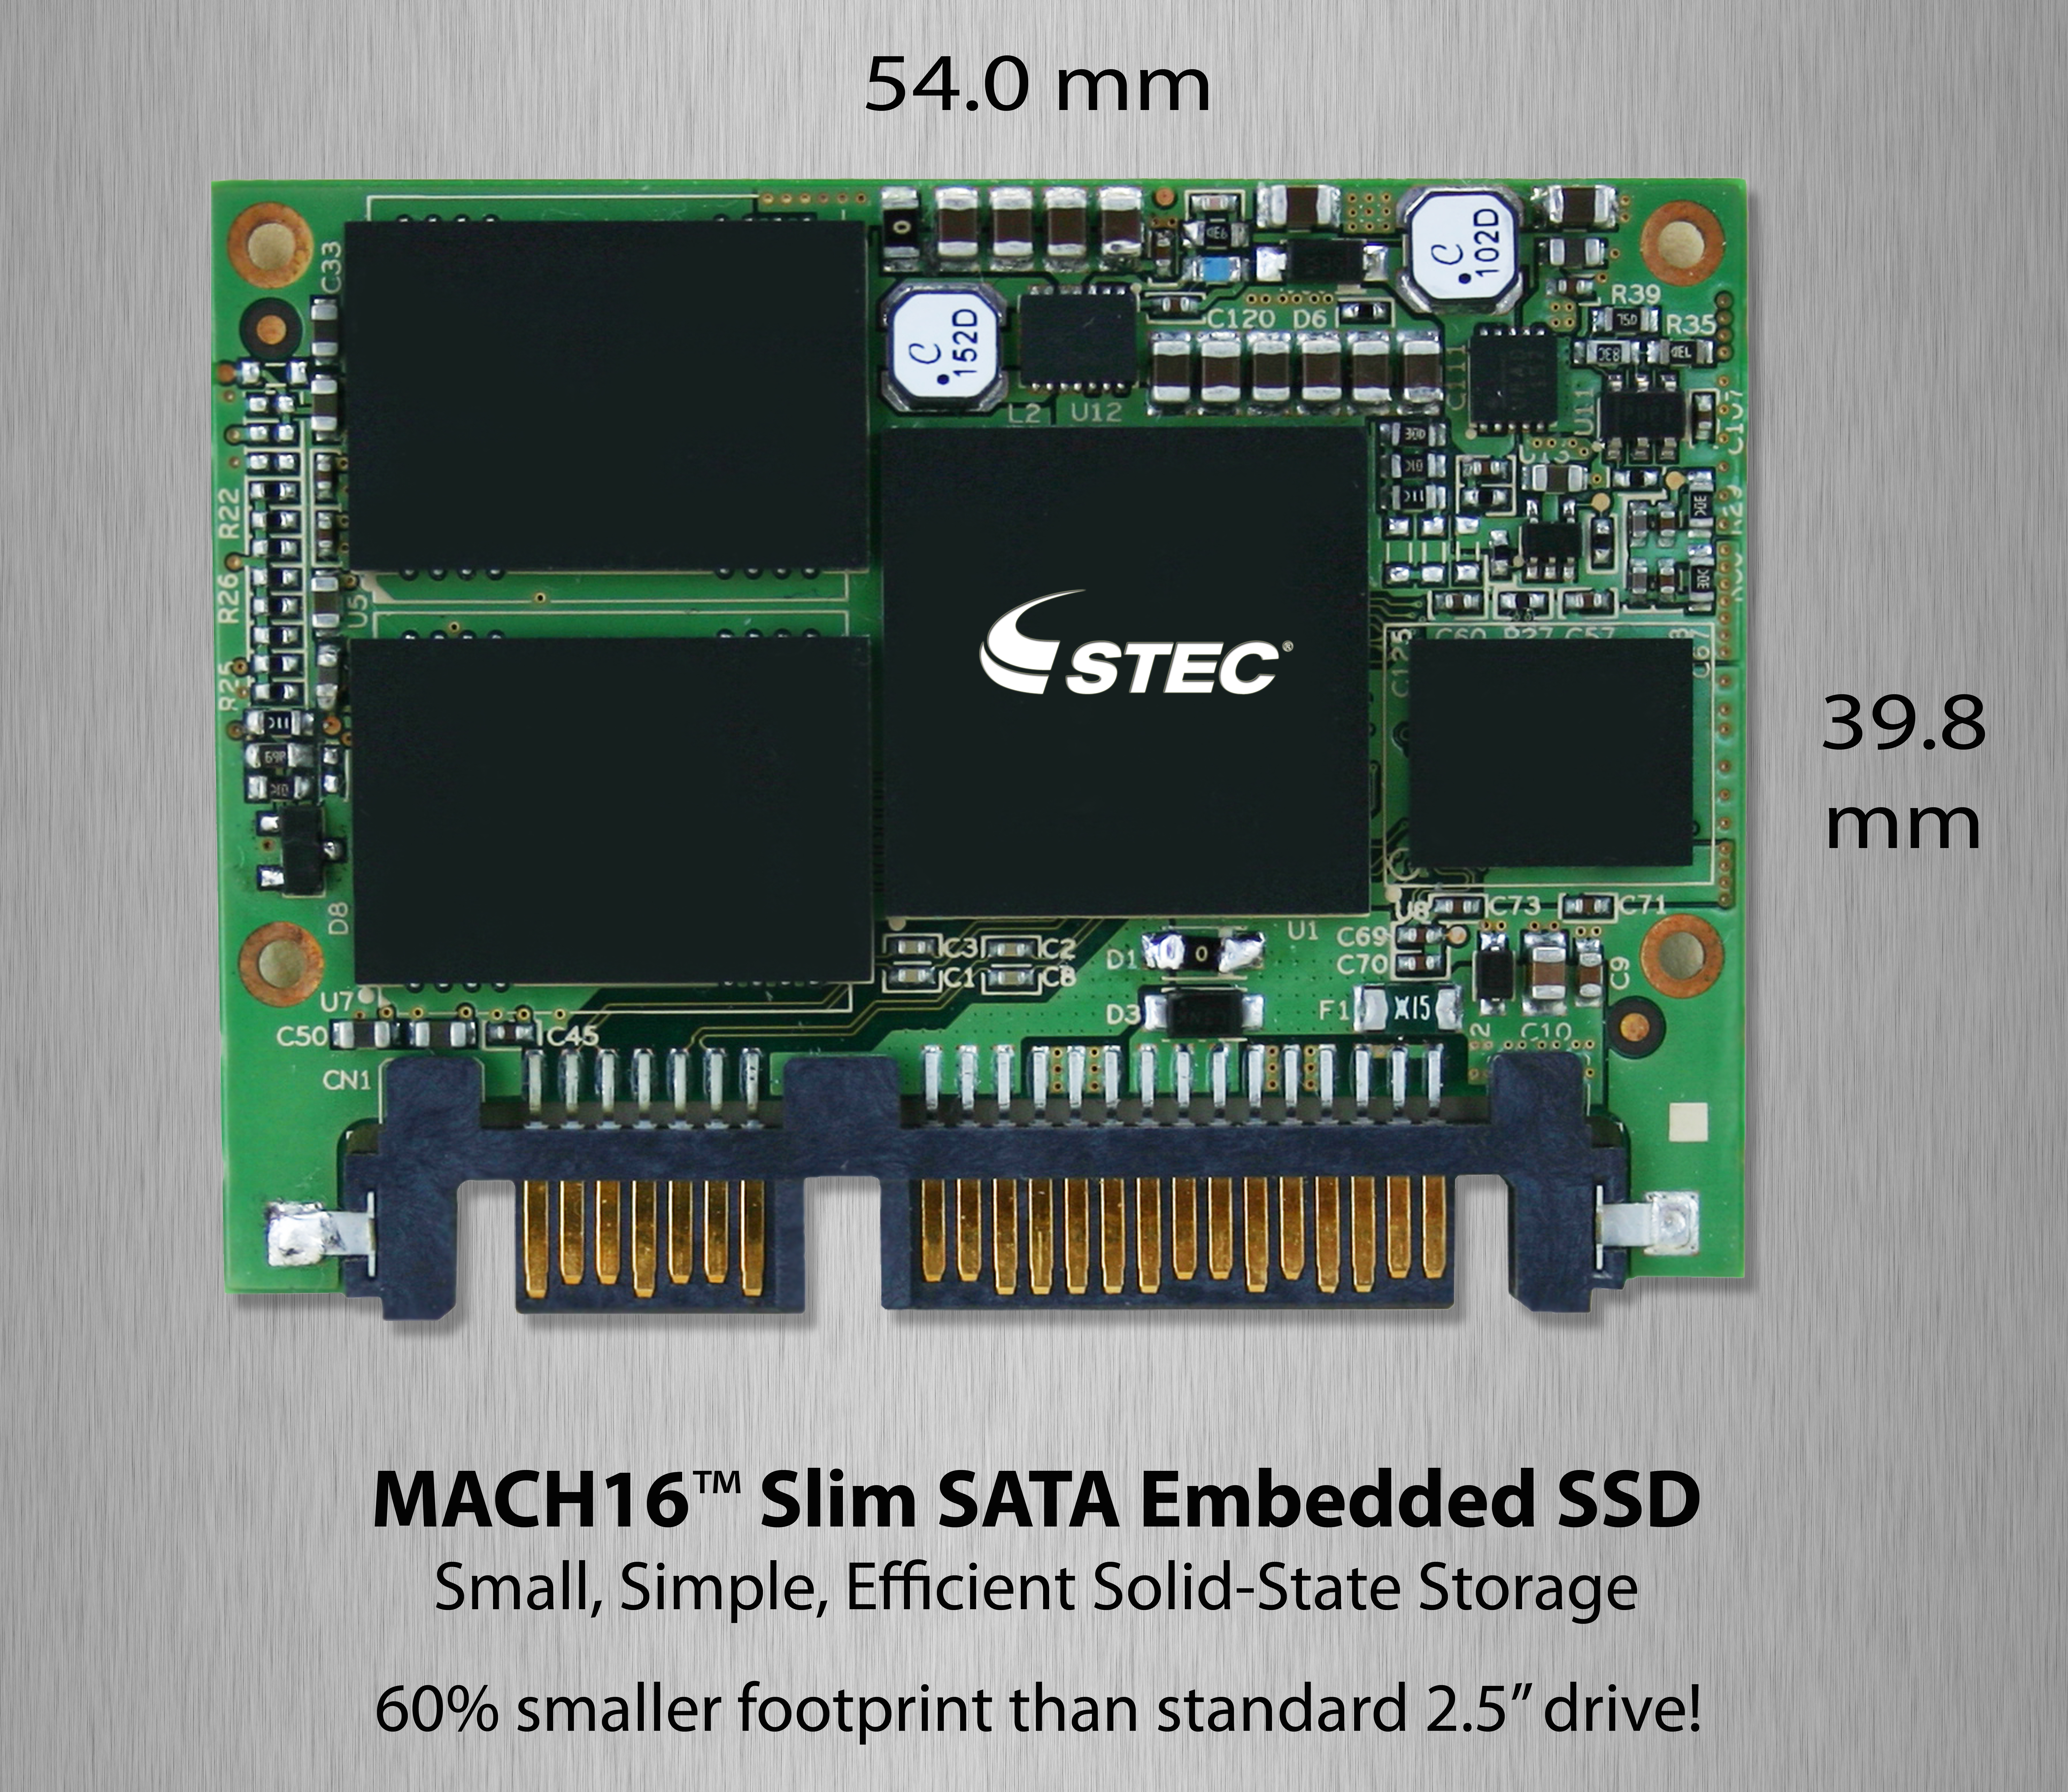 MACH16 Slim SATA SSD